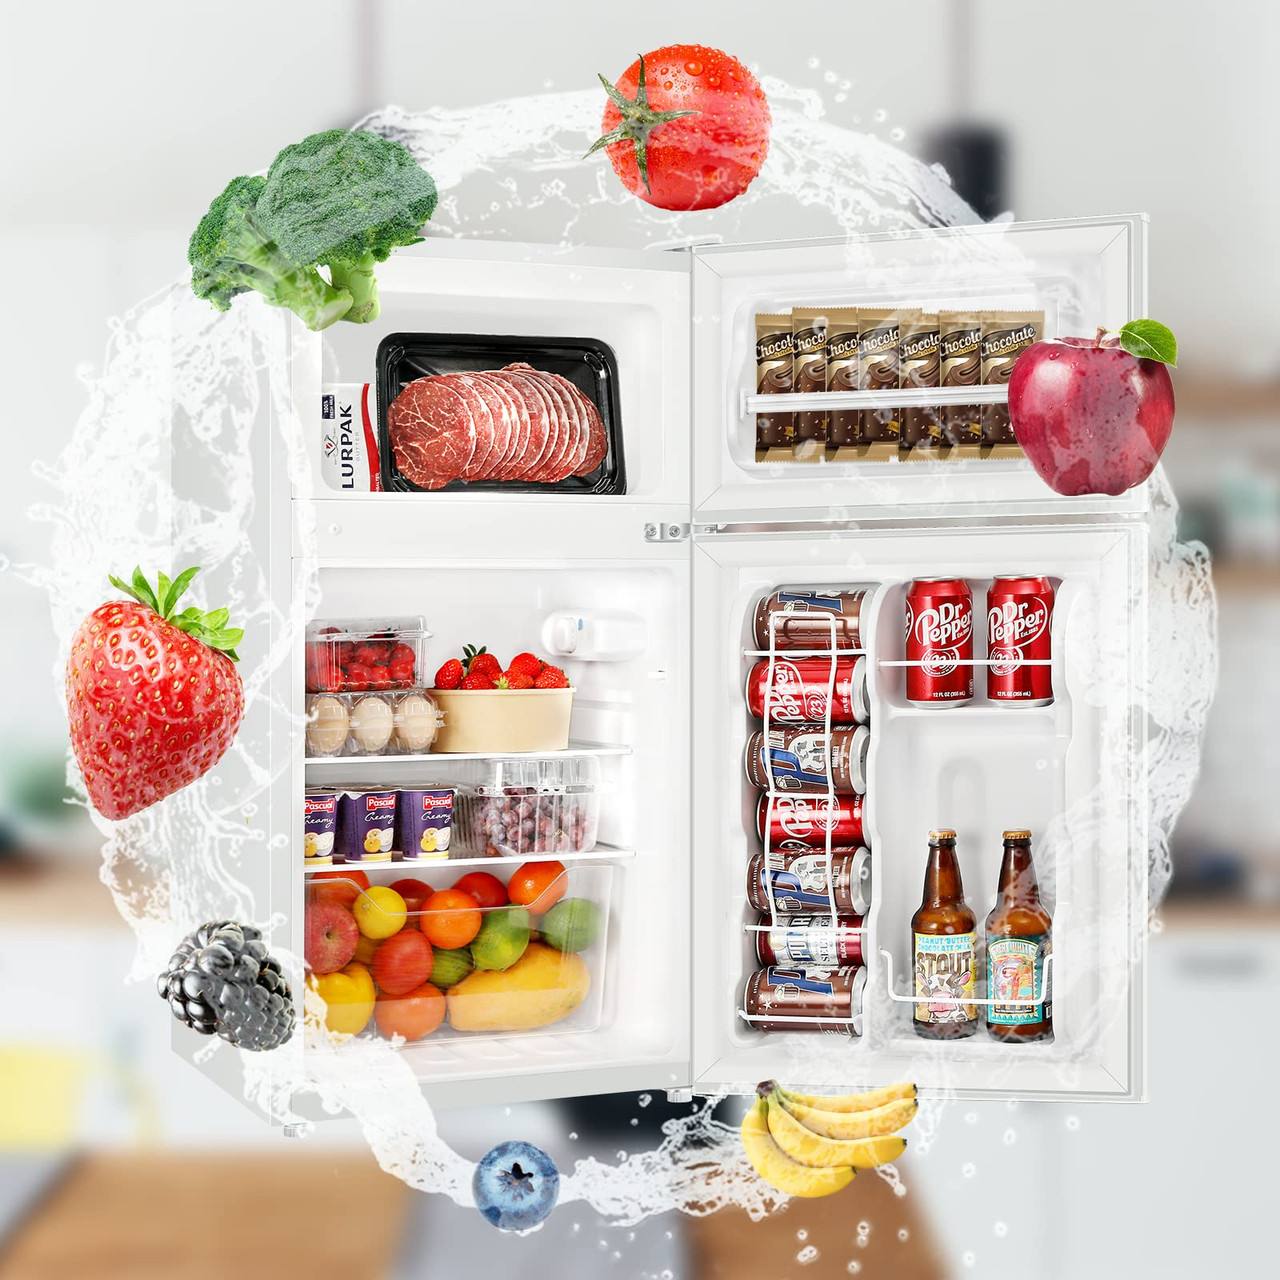 Mini Fridge with Freezer 3.2 Cu.Ft Compact Refrigerator for